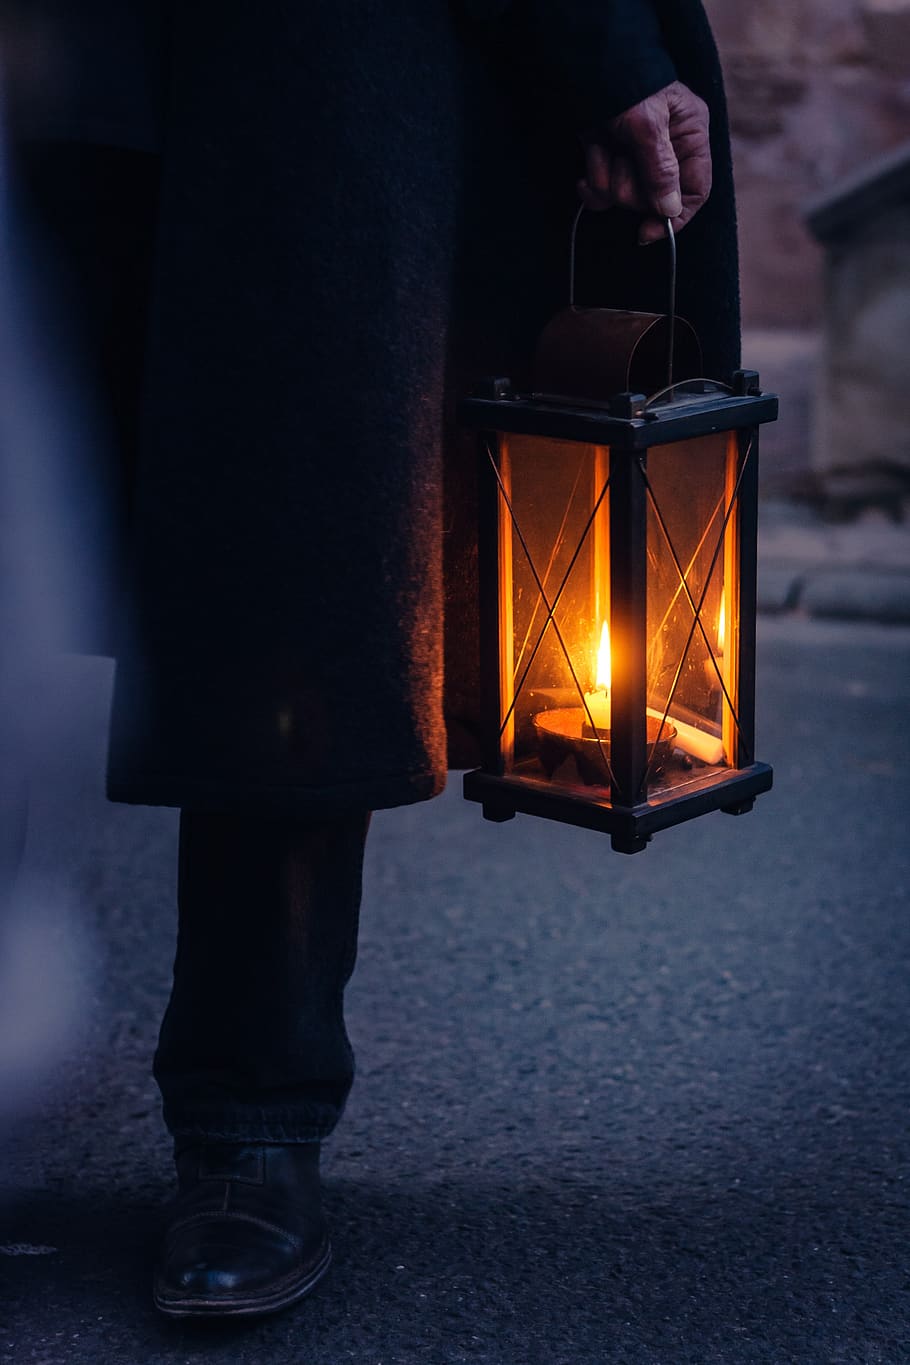 lamp, lantern, candle light, night, warm, cold, dark, bear, hand, evening